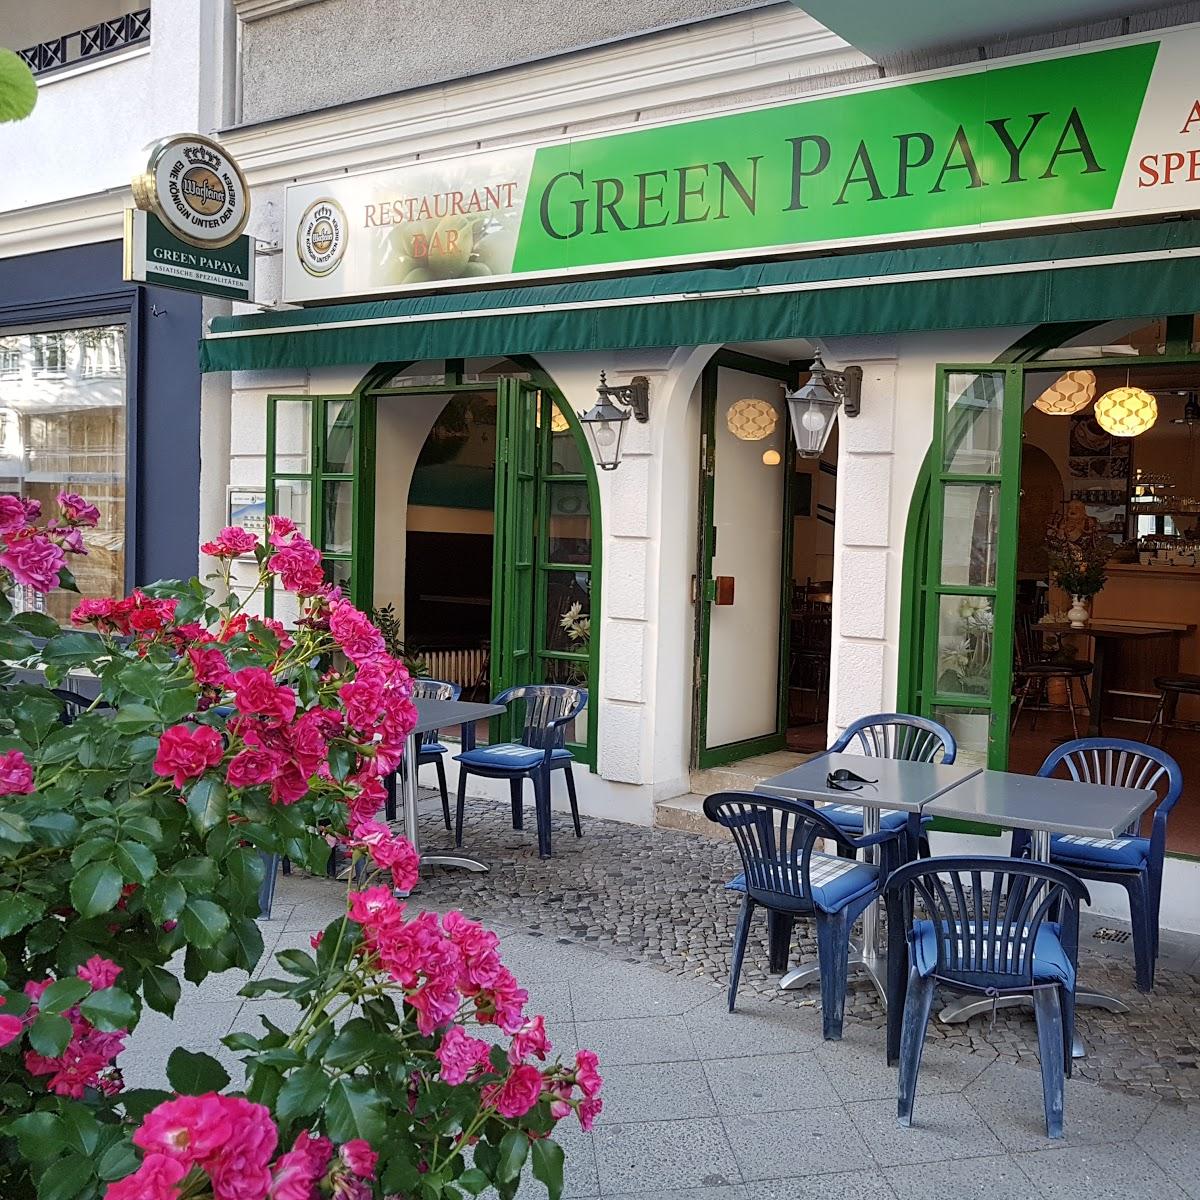 Restaurant "Green Papaya" in Berlin